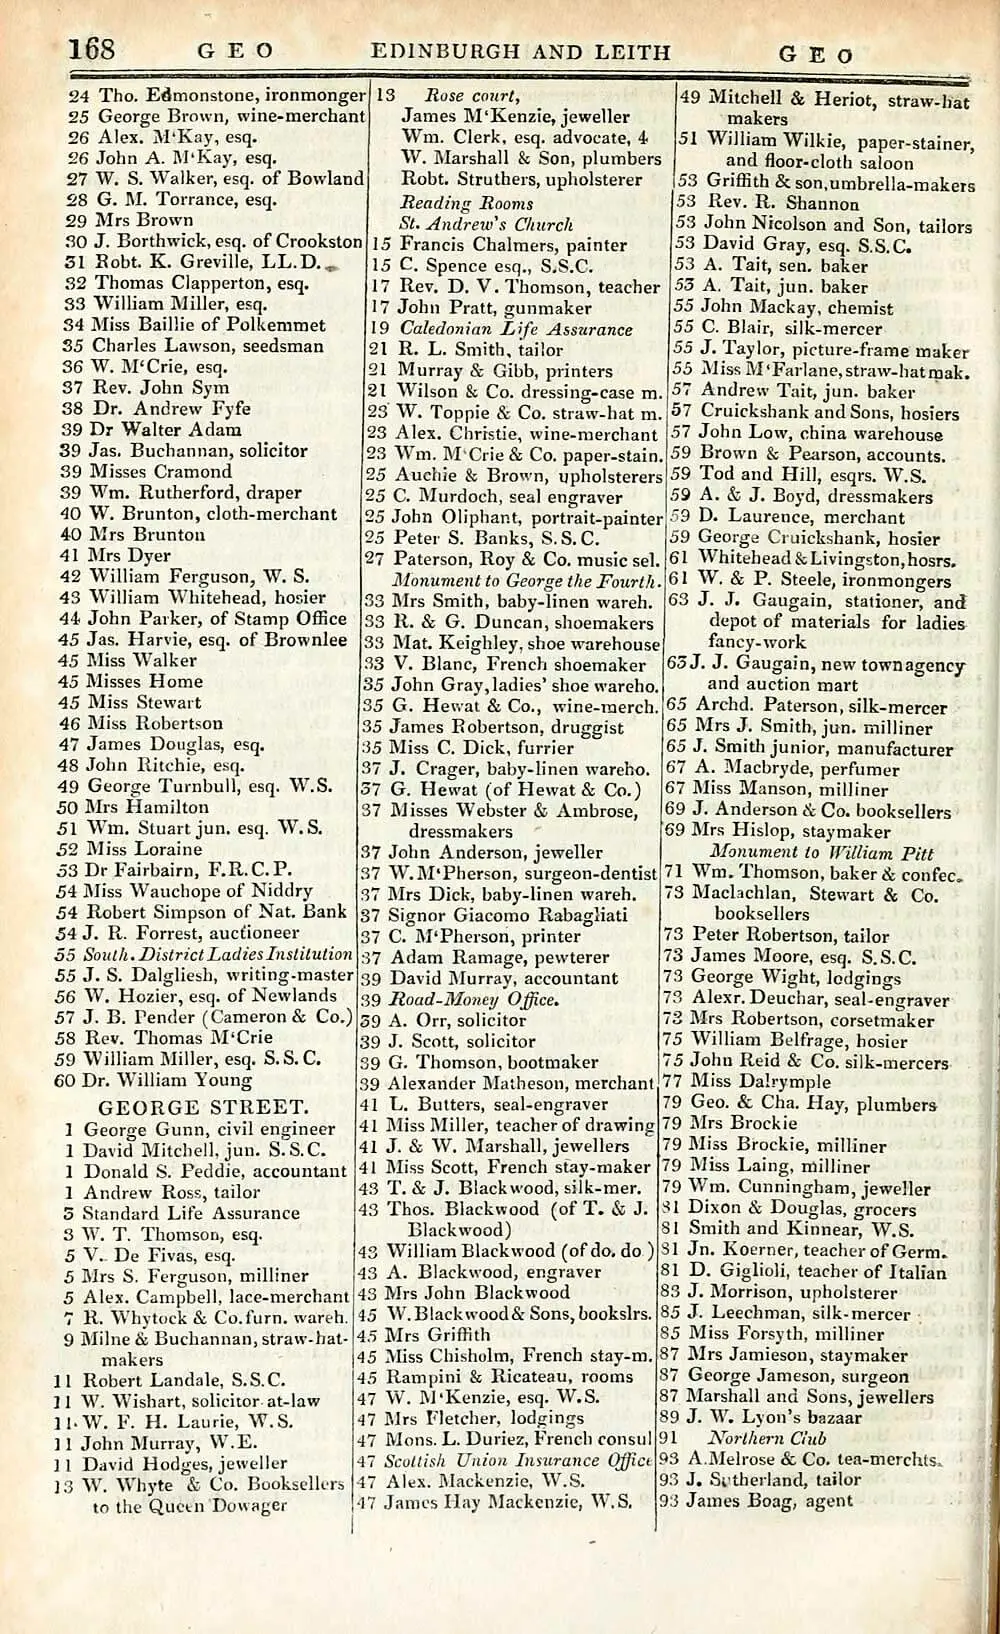 george cruickshank hosier scottish post office directory 1841 42